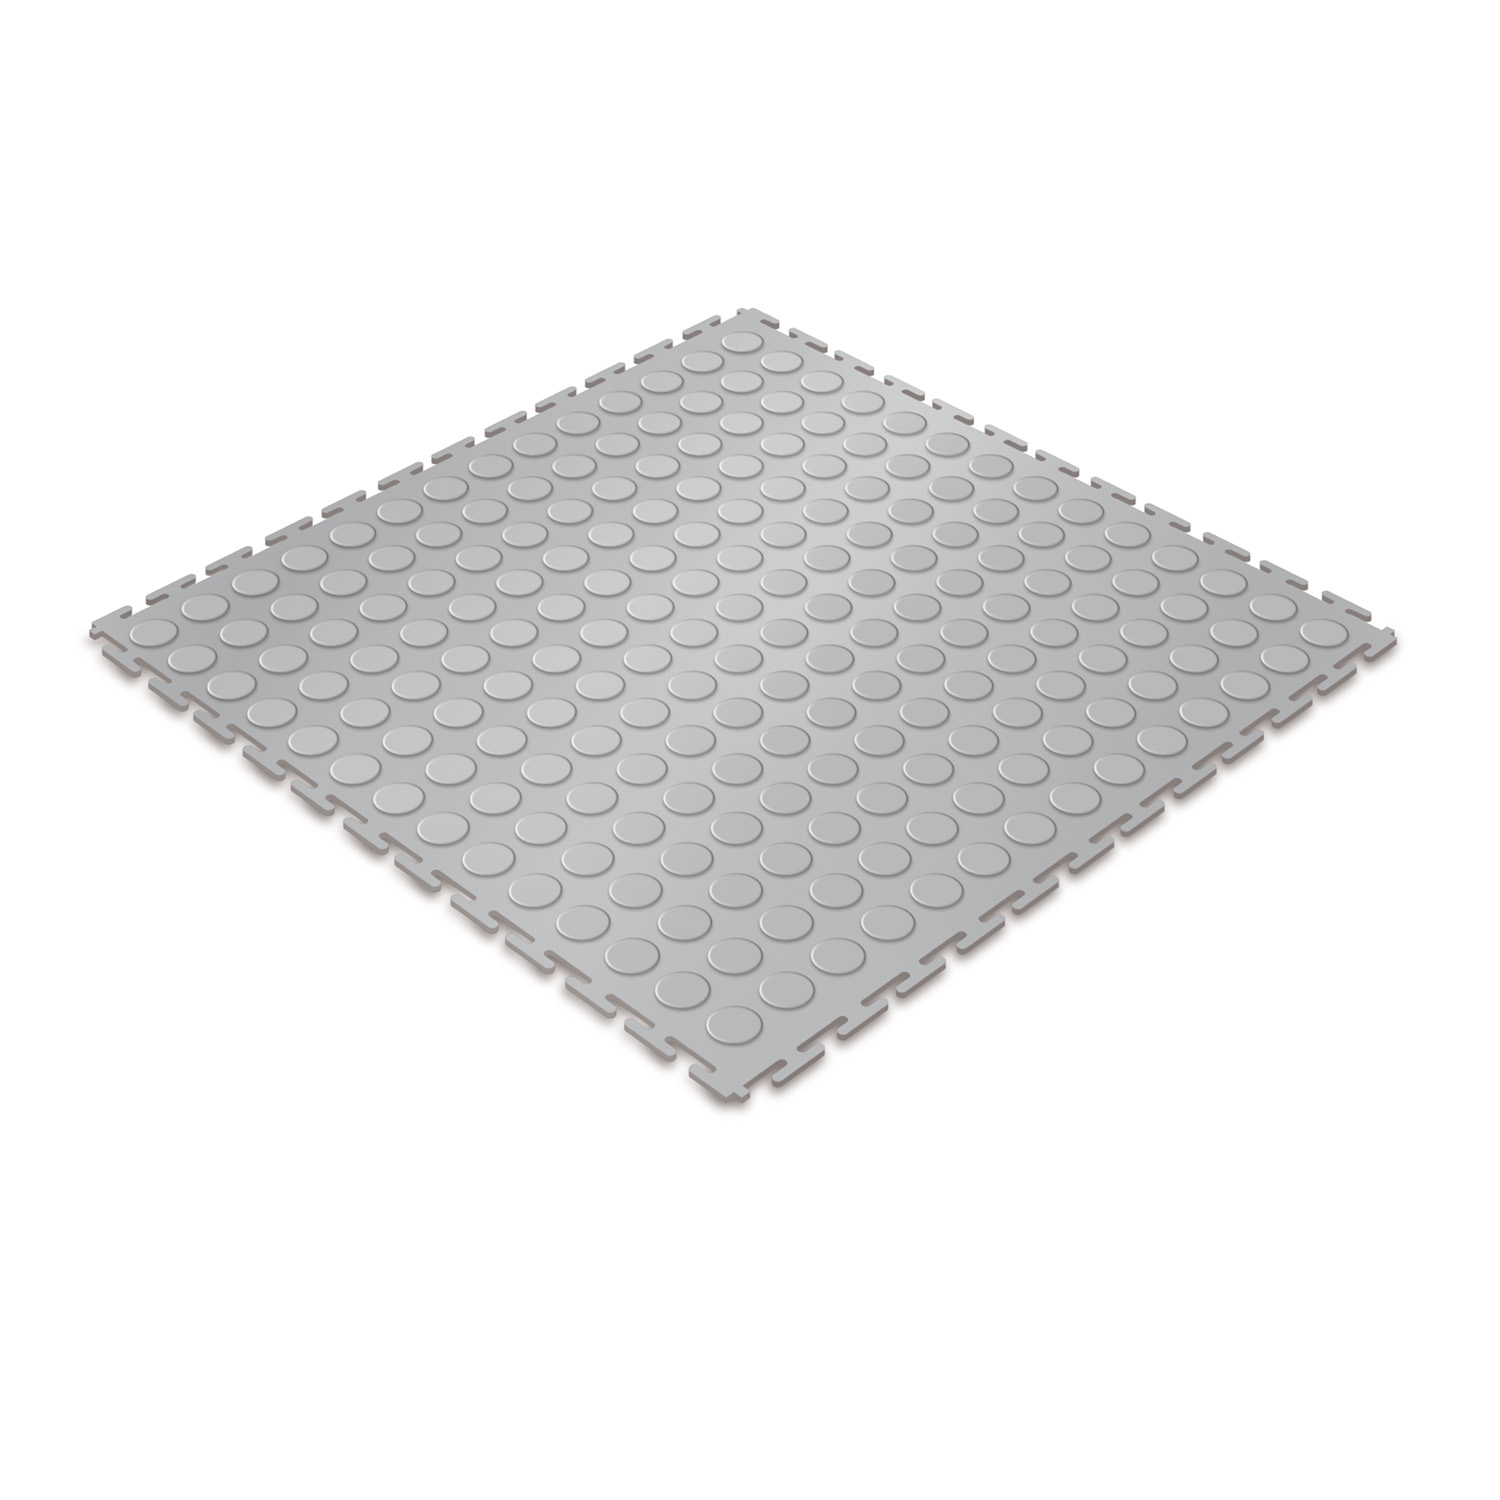 Standard floor tile (light grey/studded)